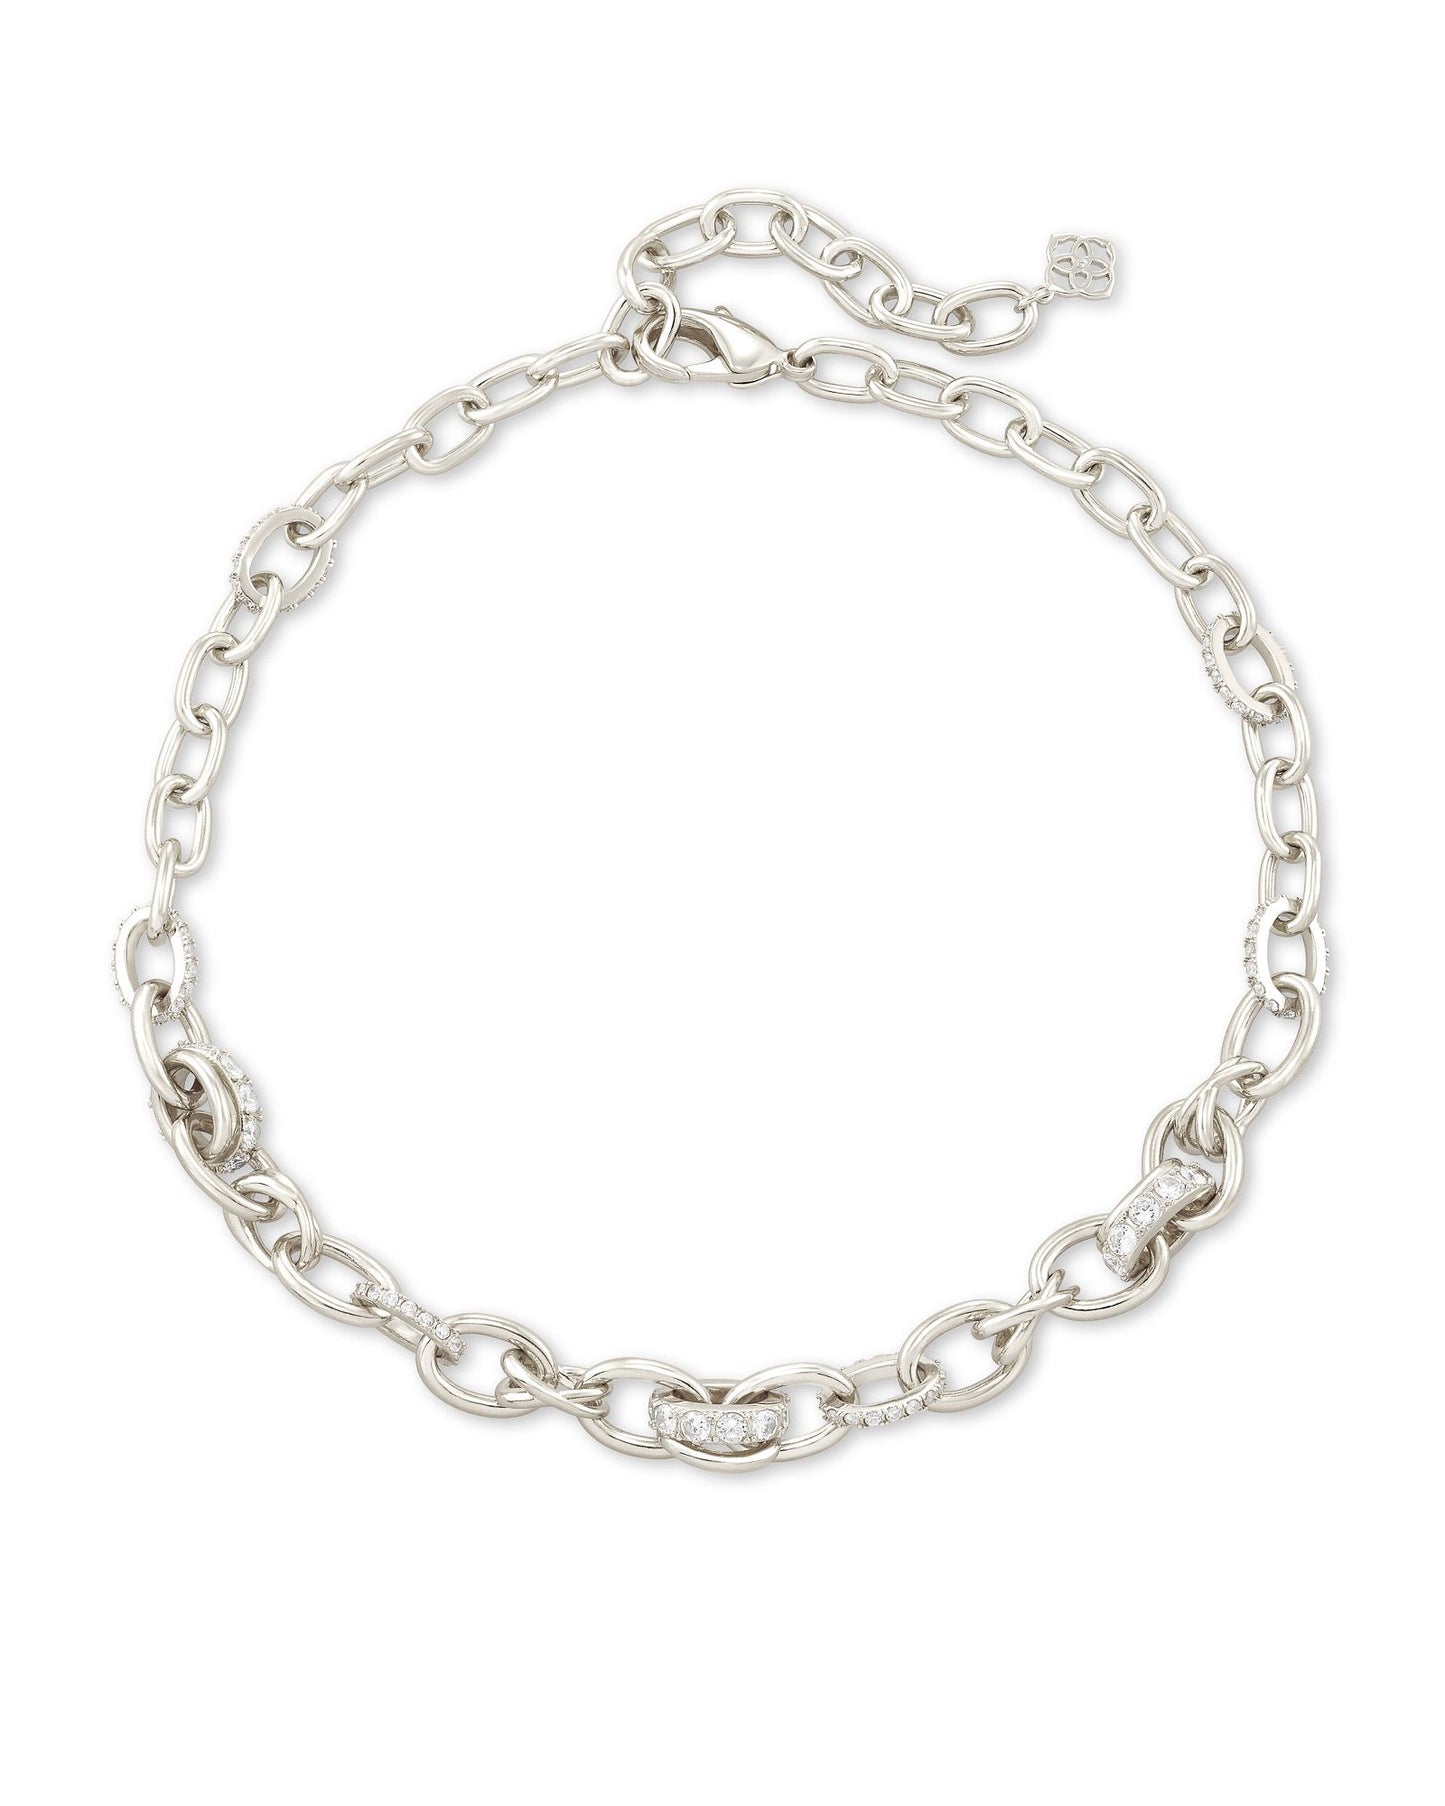 Kendra Scott Livy Chain Necklace